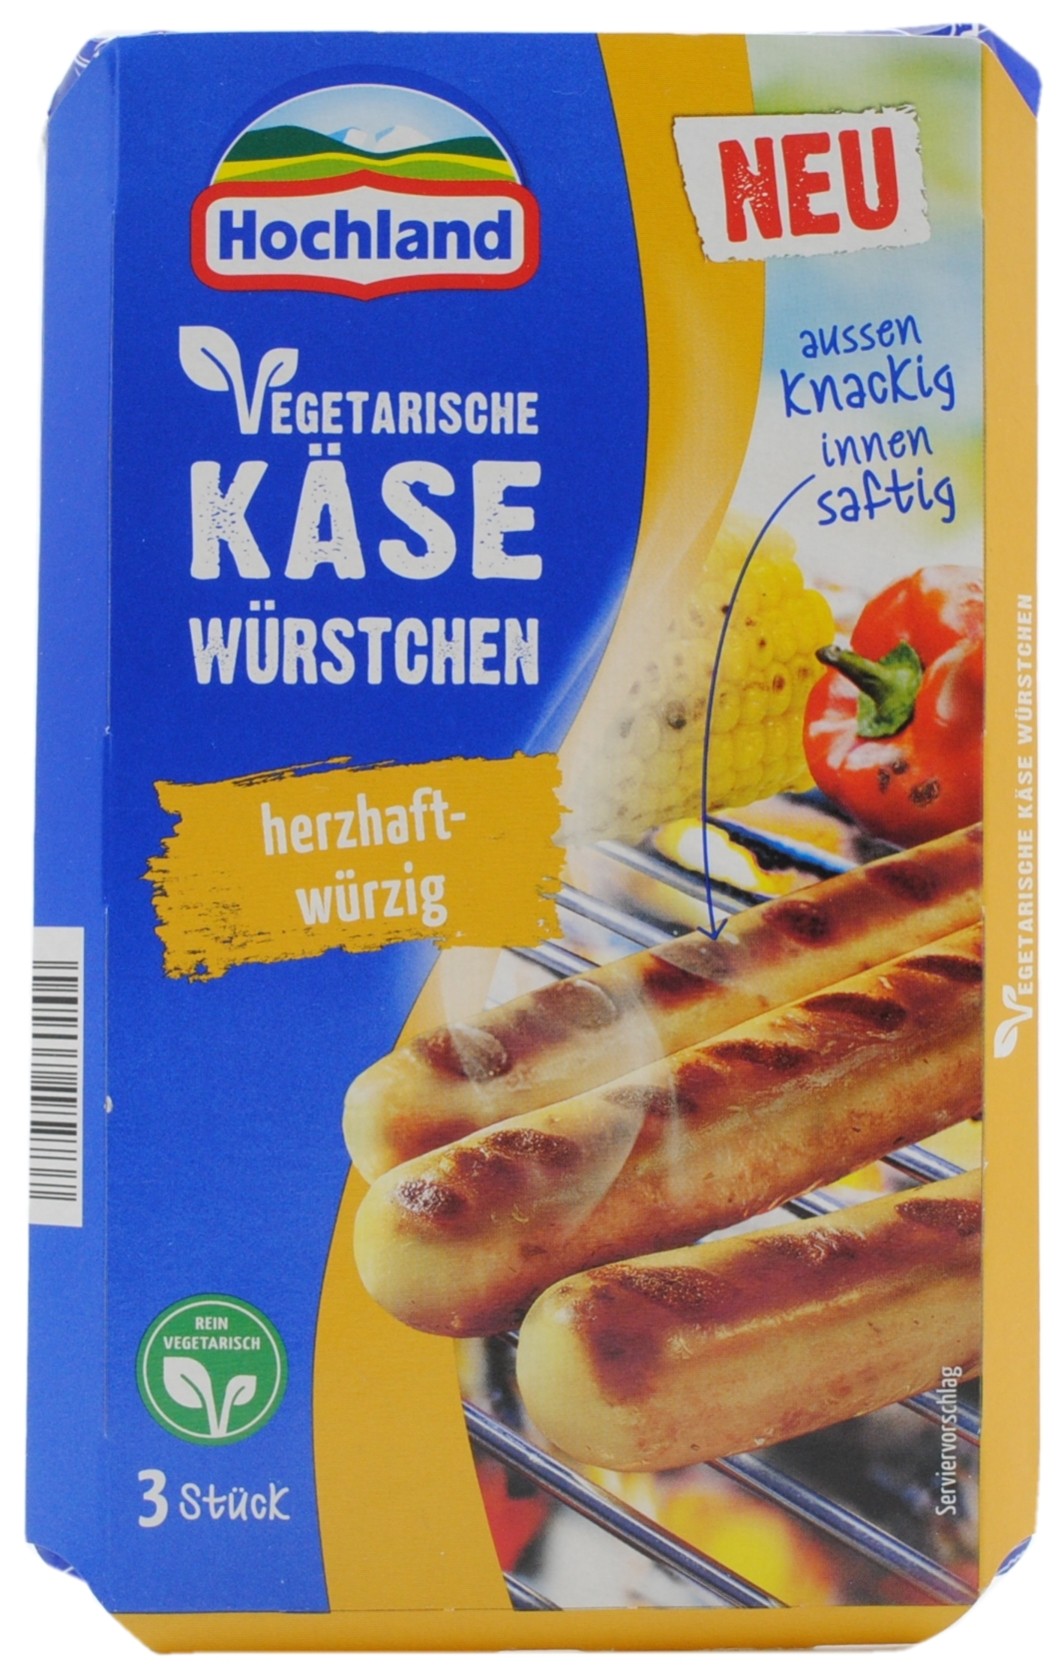 Vegetarian Cheese Sausages